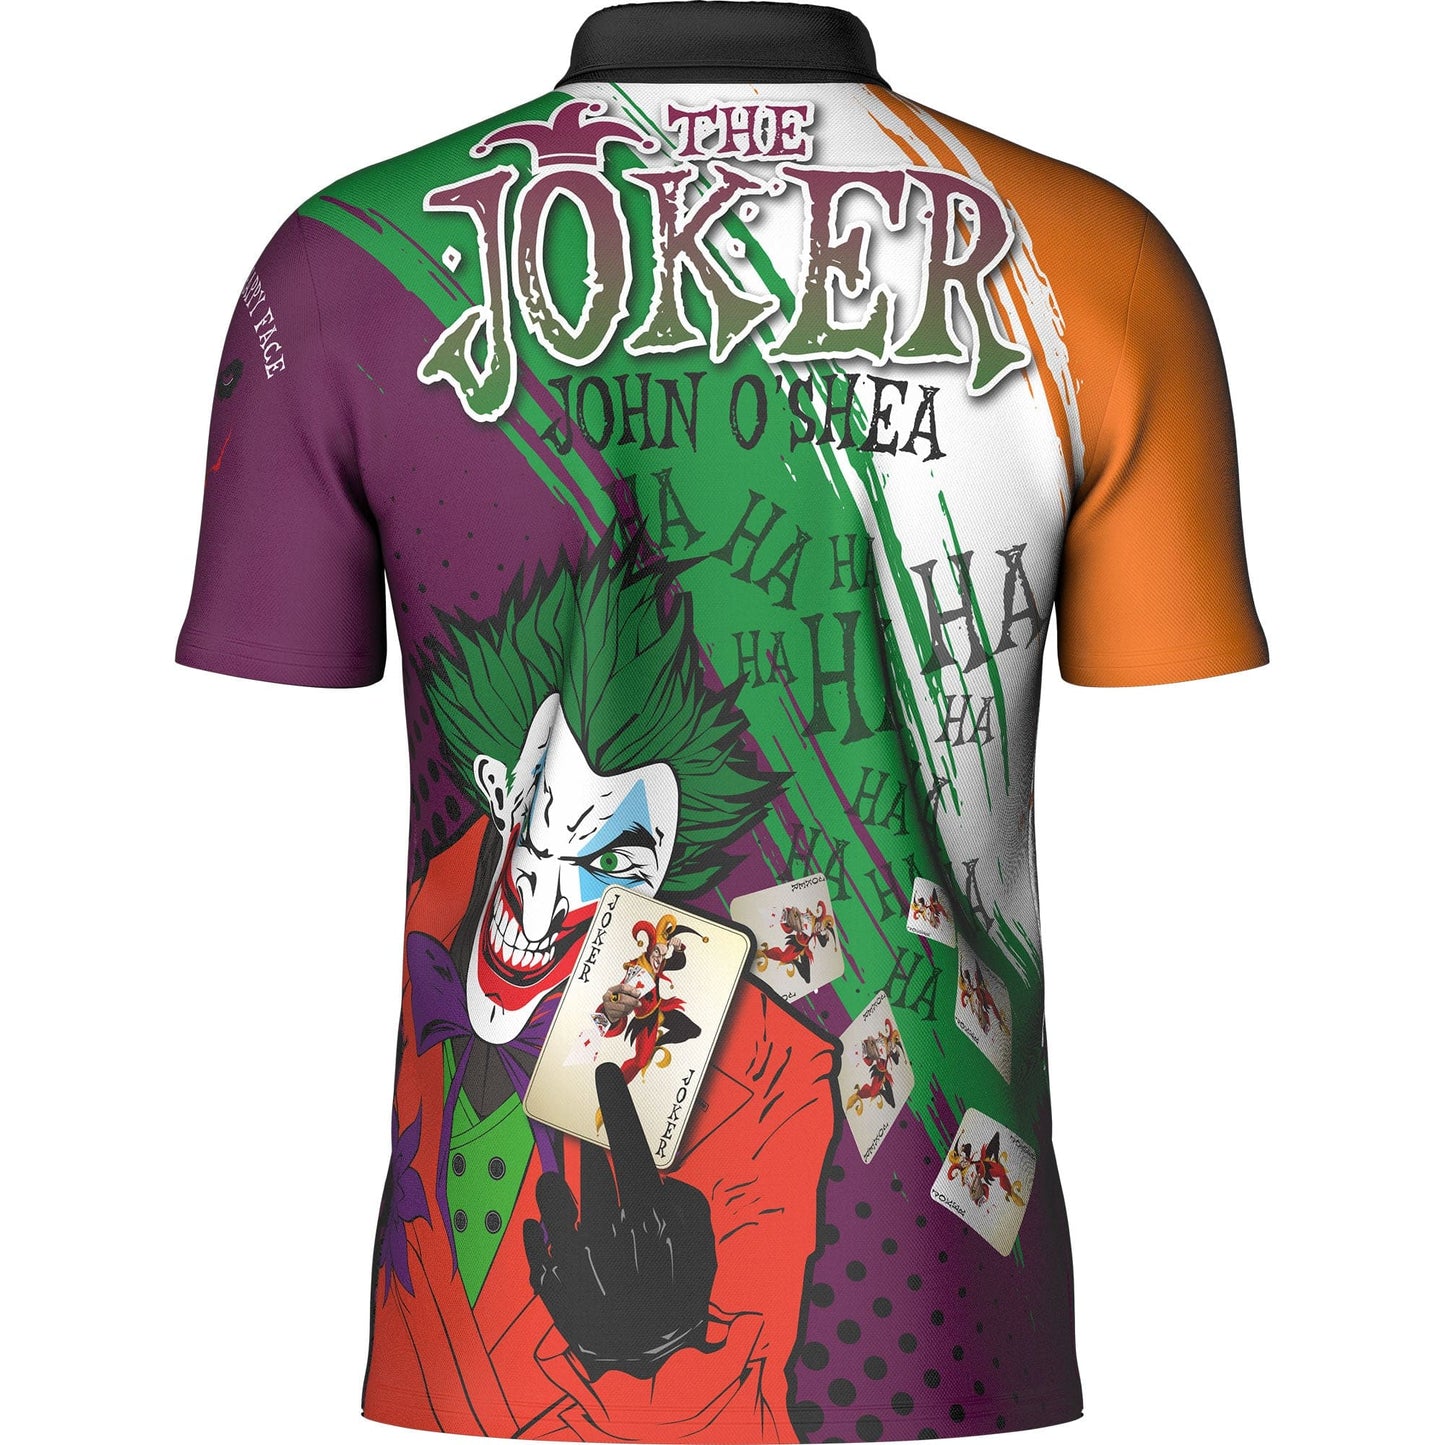 *Mission Player Dart Shirt - John O Shea - The Joker